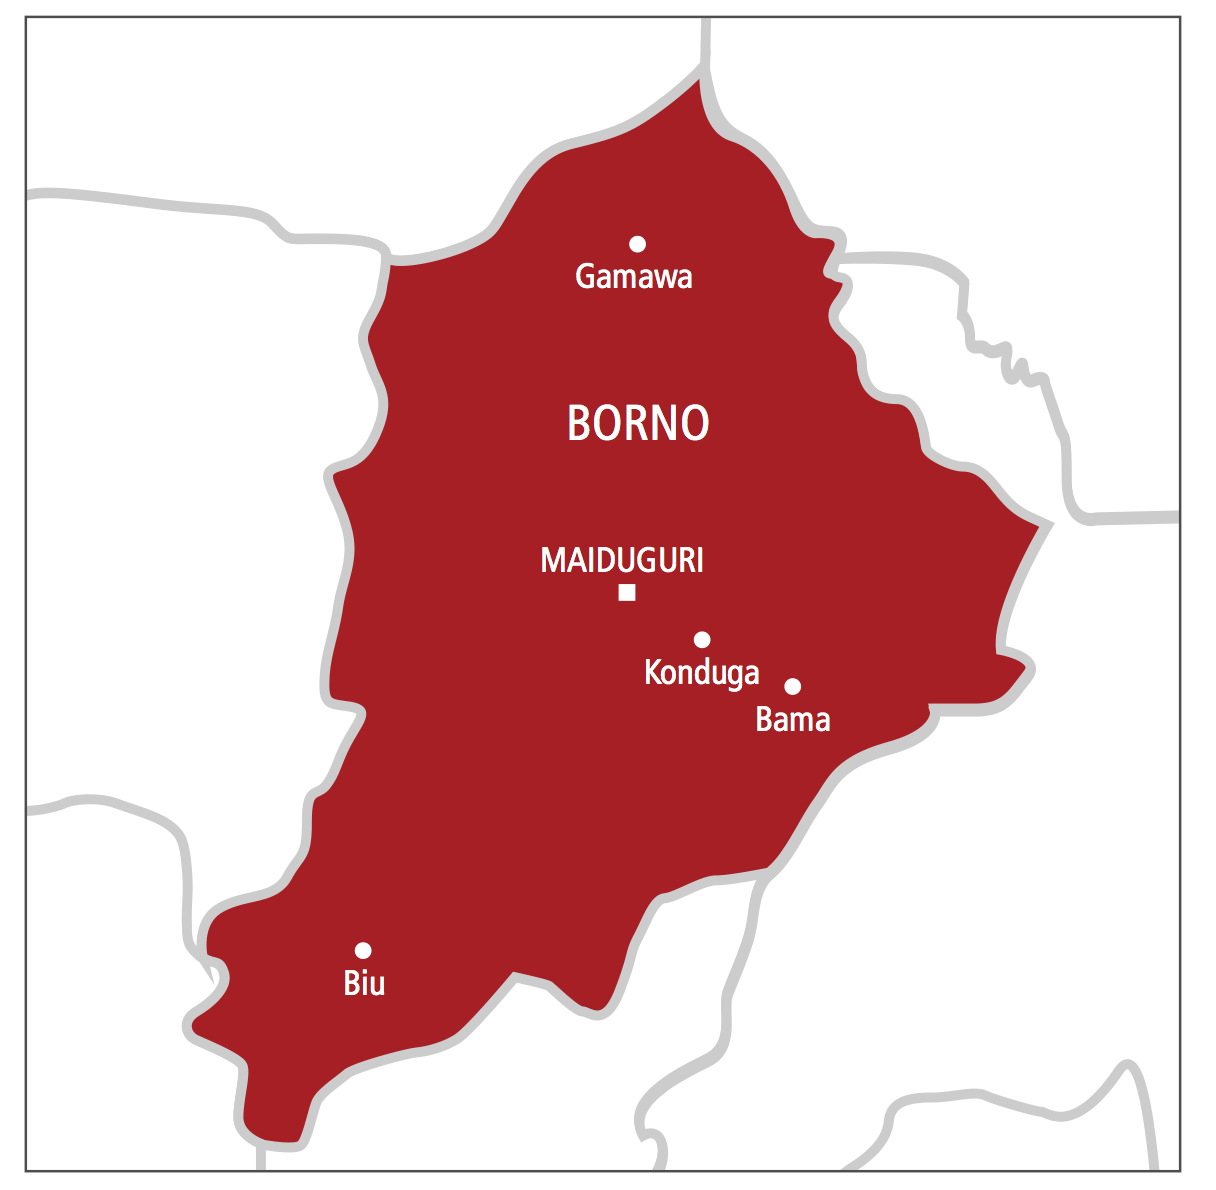 An dasa bom a wajen ɗaurin aure a Borno